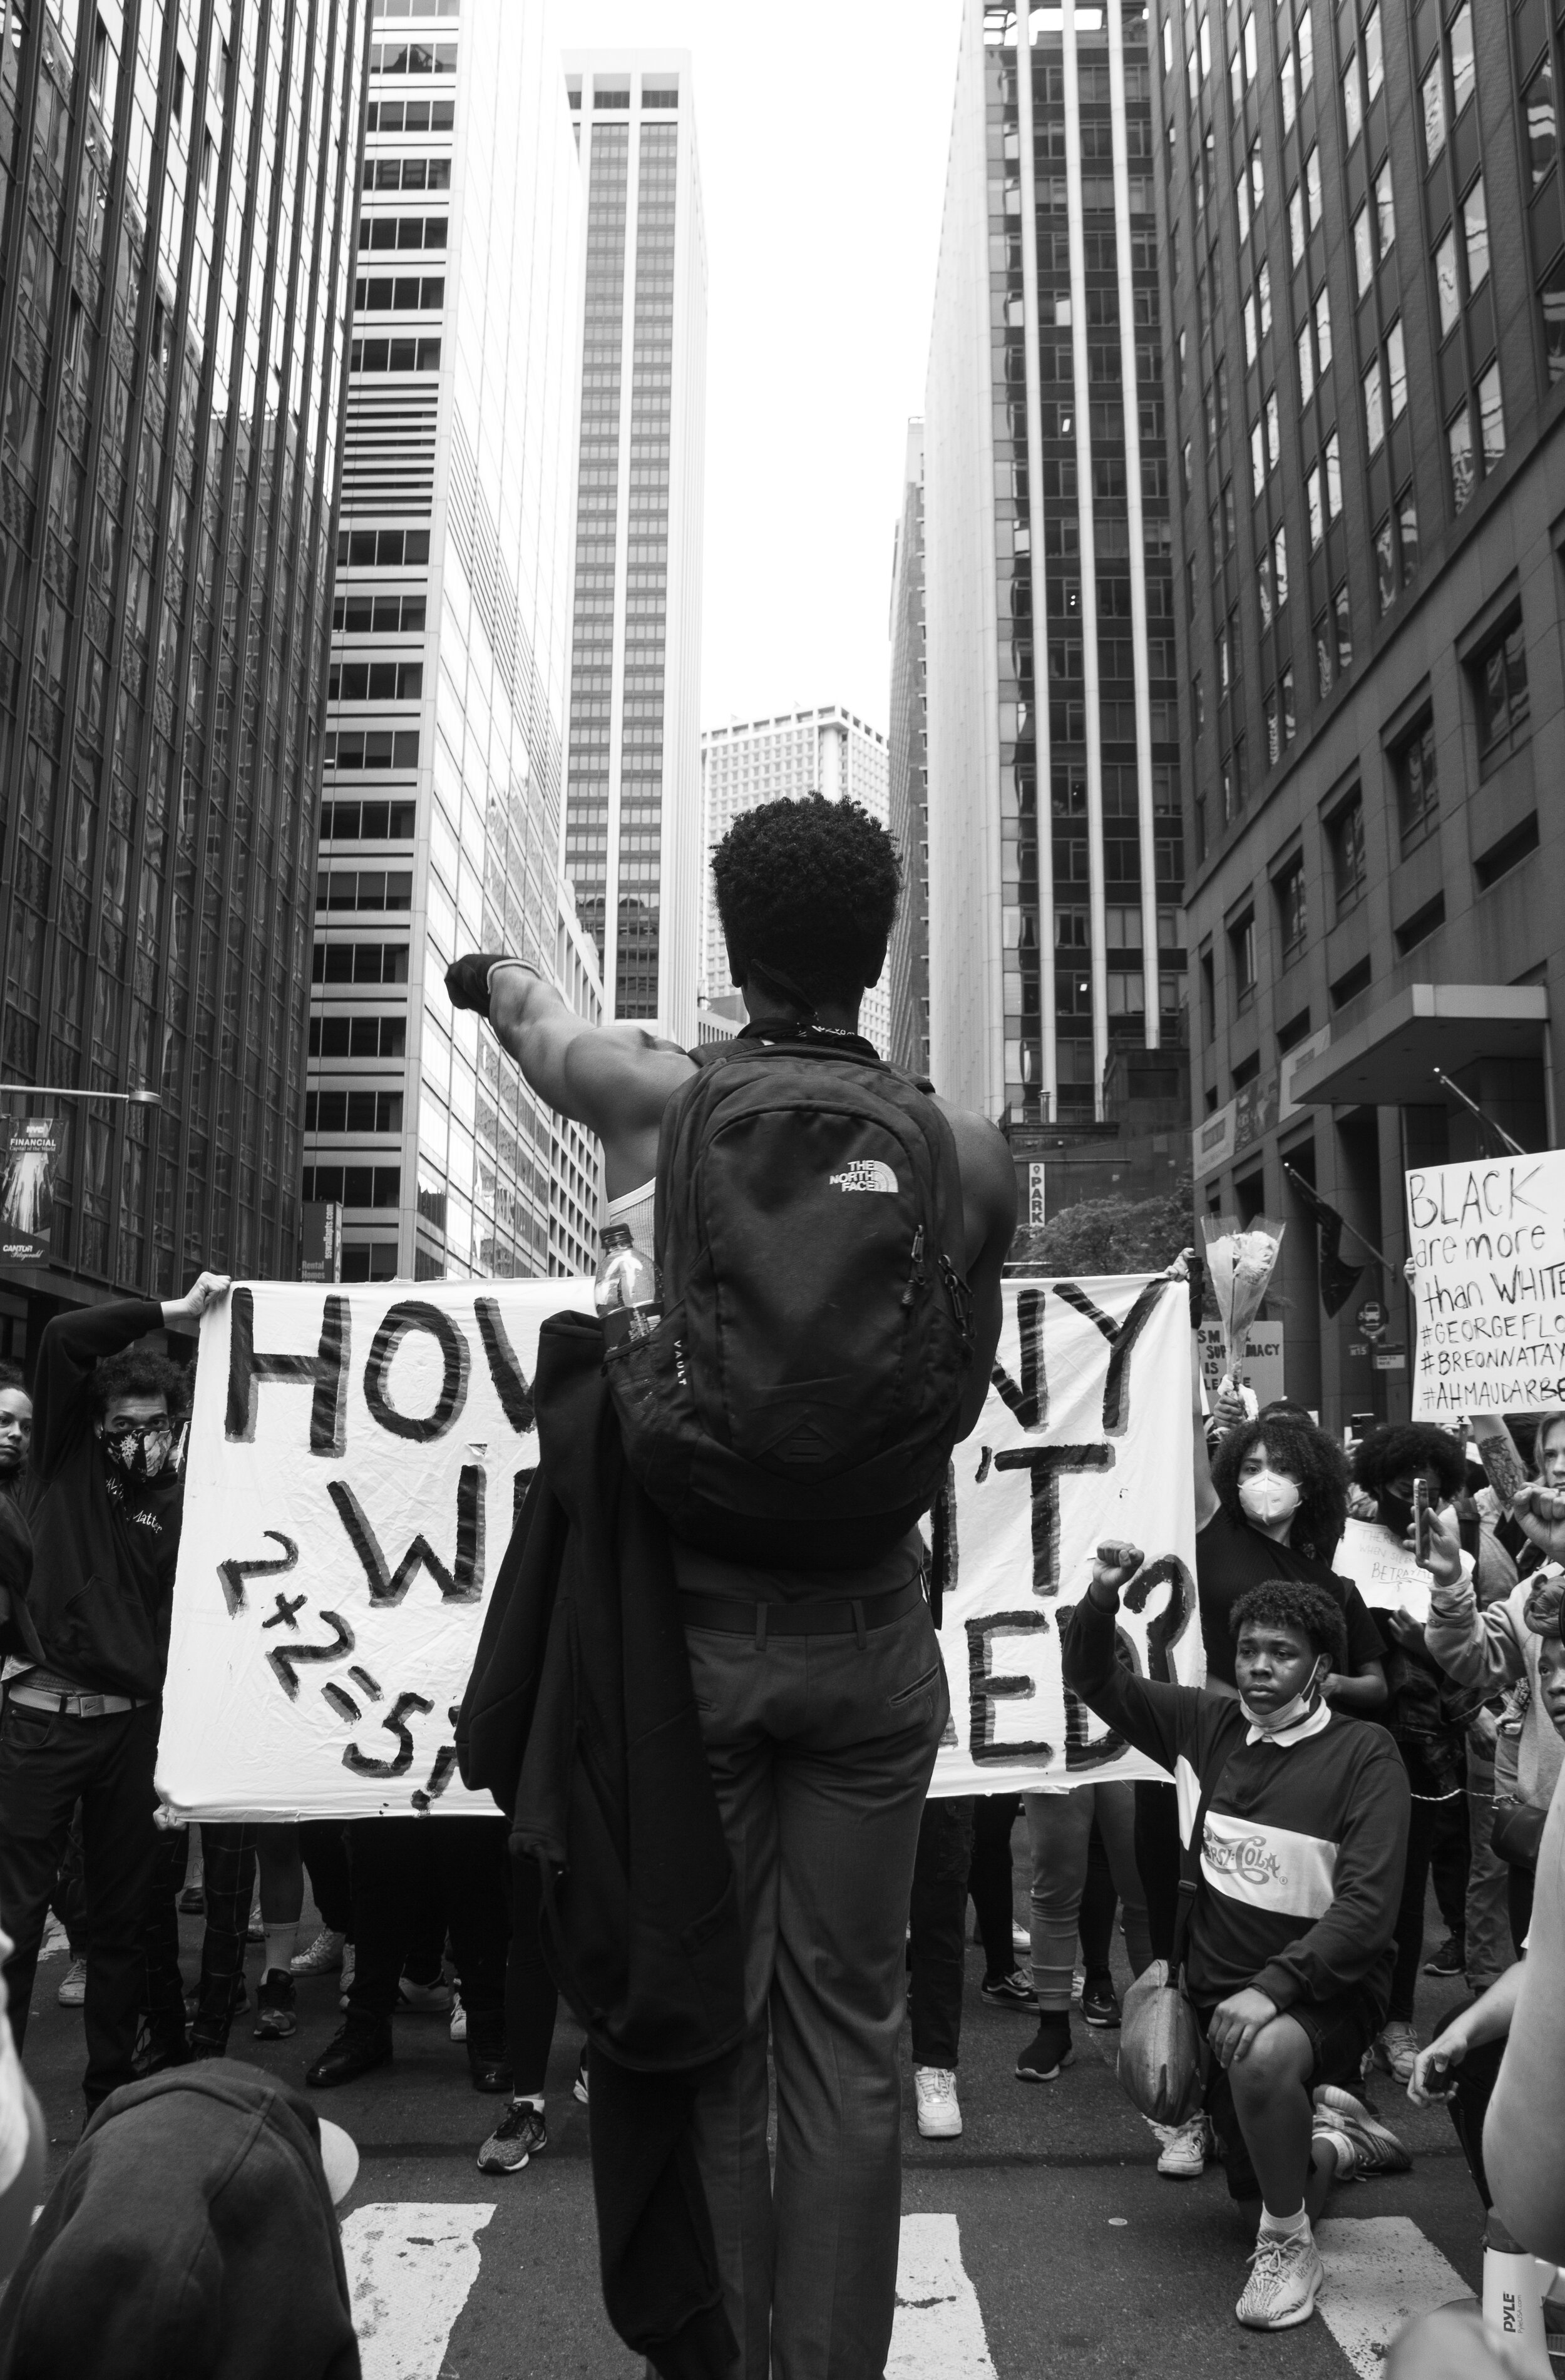  Black Lives Matter Movement, NYC, 2020.6 